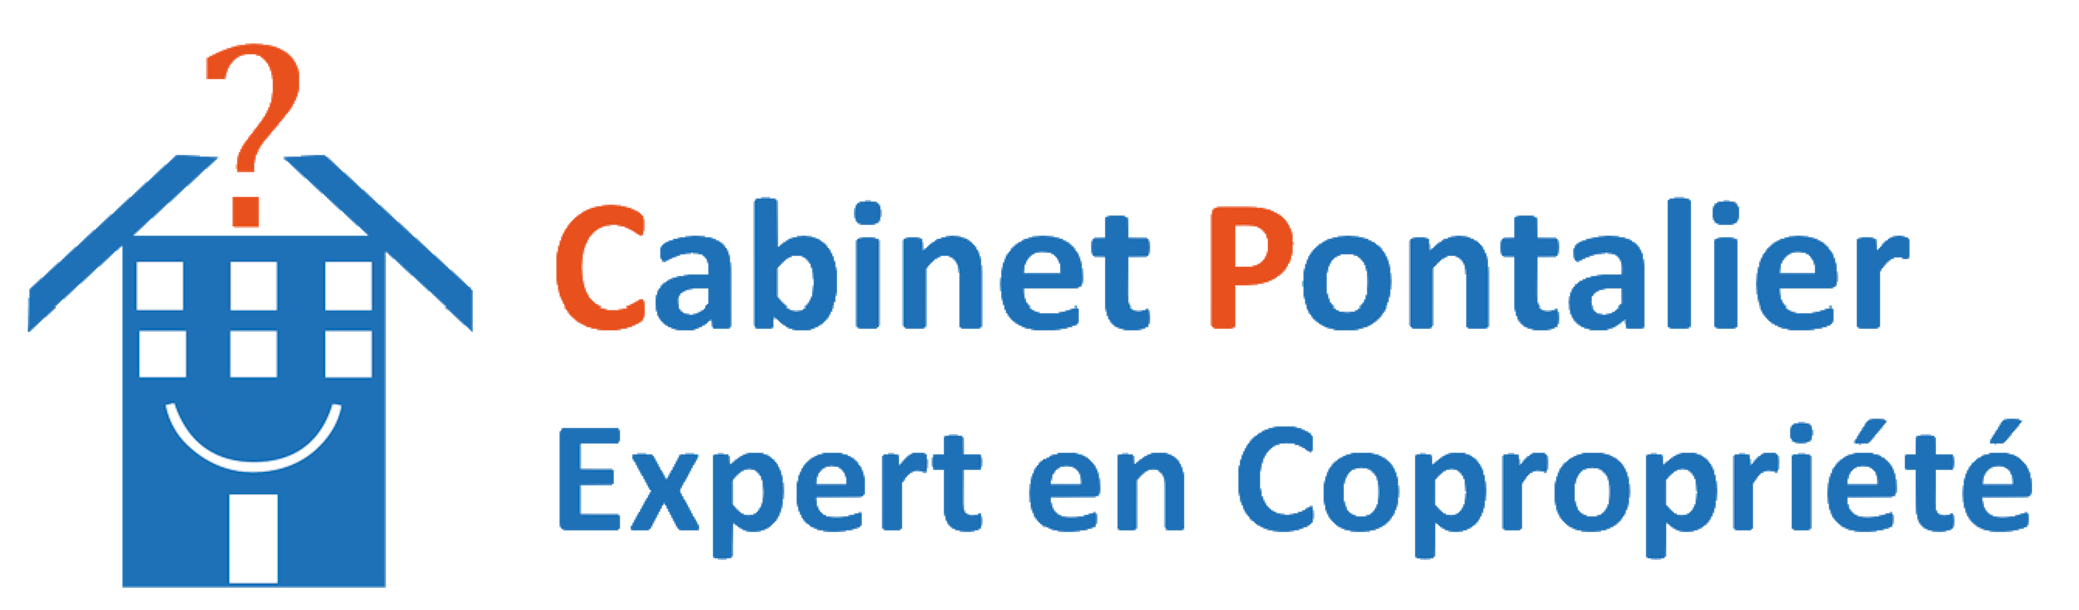 Cabinet Pontalier